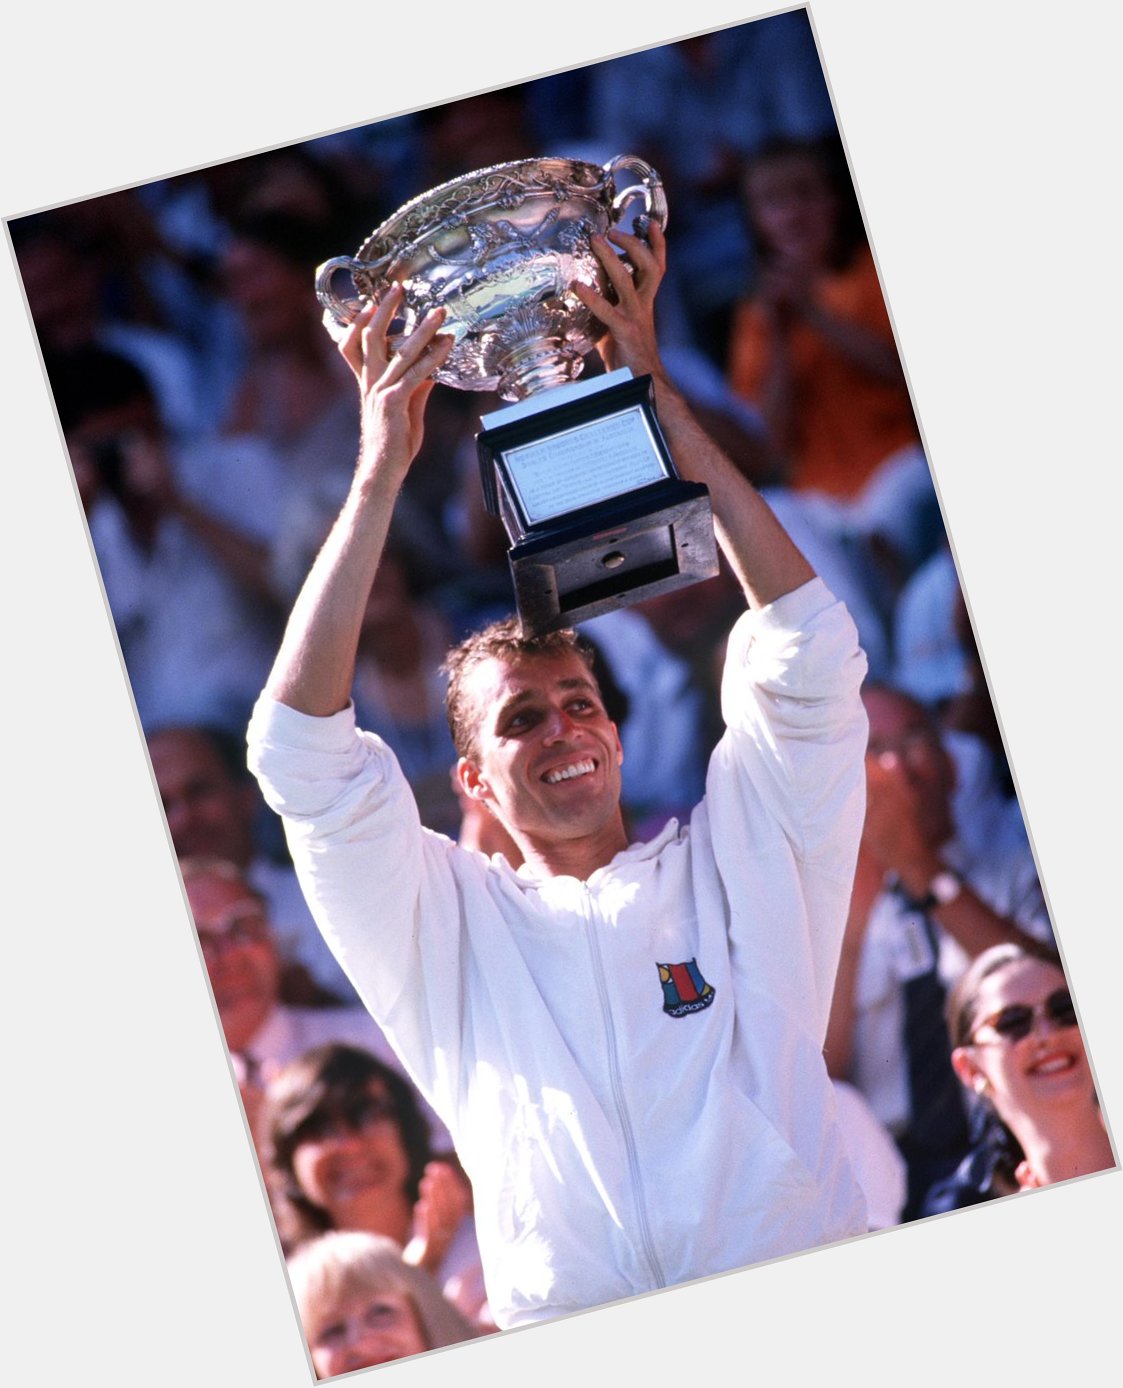 AustralianOpen: Happy birthday to former champ, Ivan Lendl!   